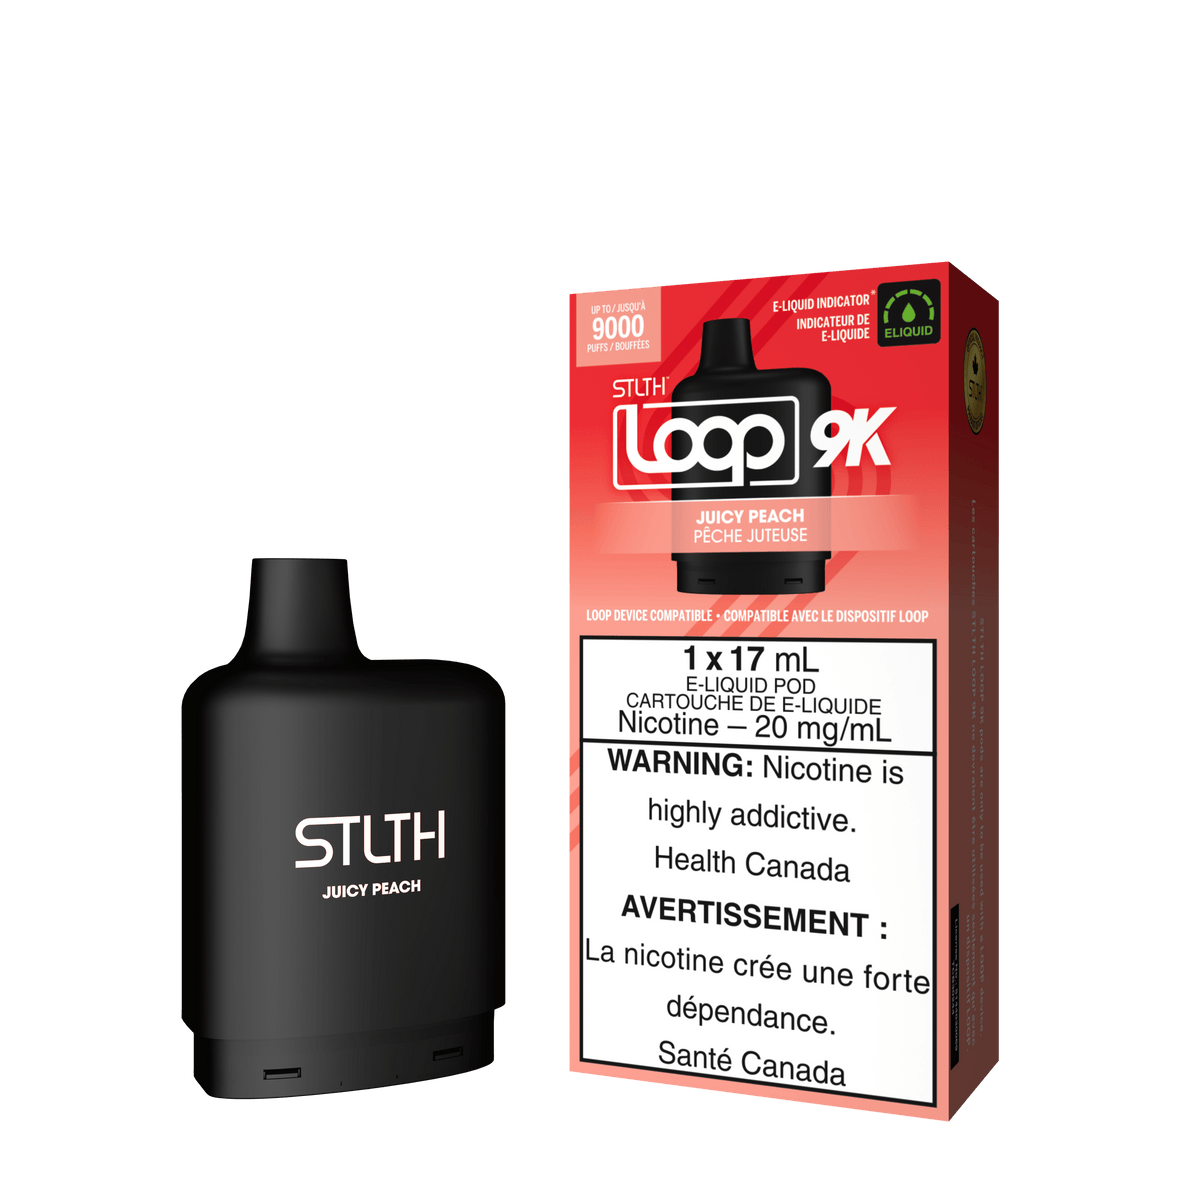 STLTH Loop 9K Pod - Juicy Peach available on Canada online vape shop